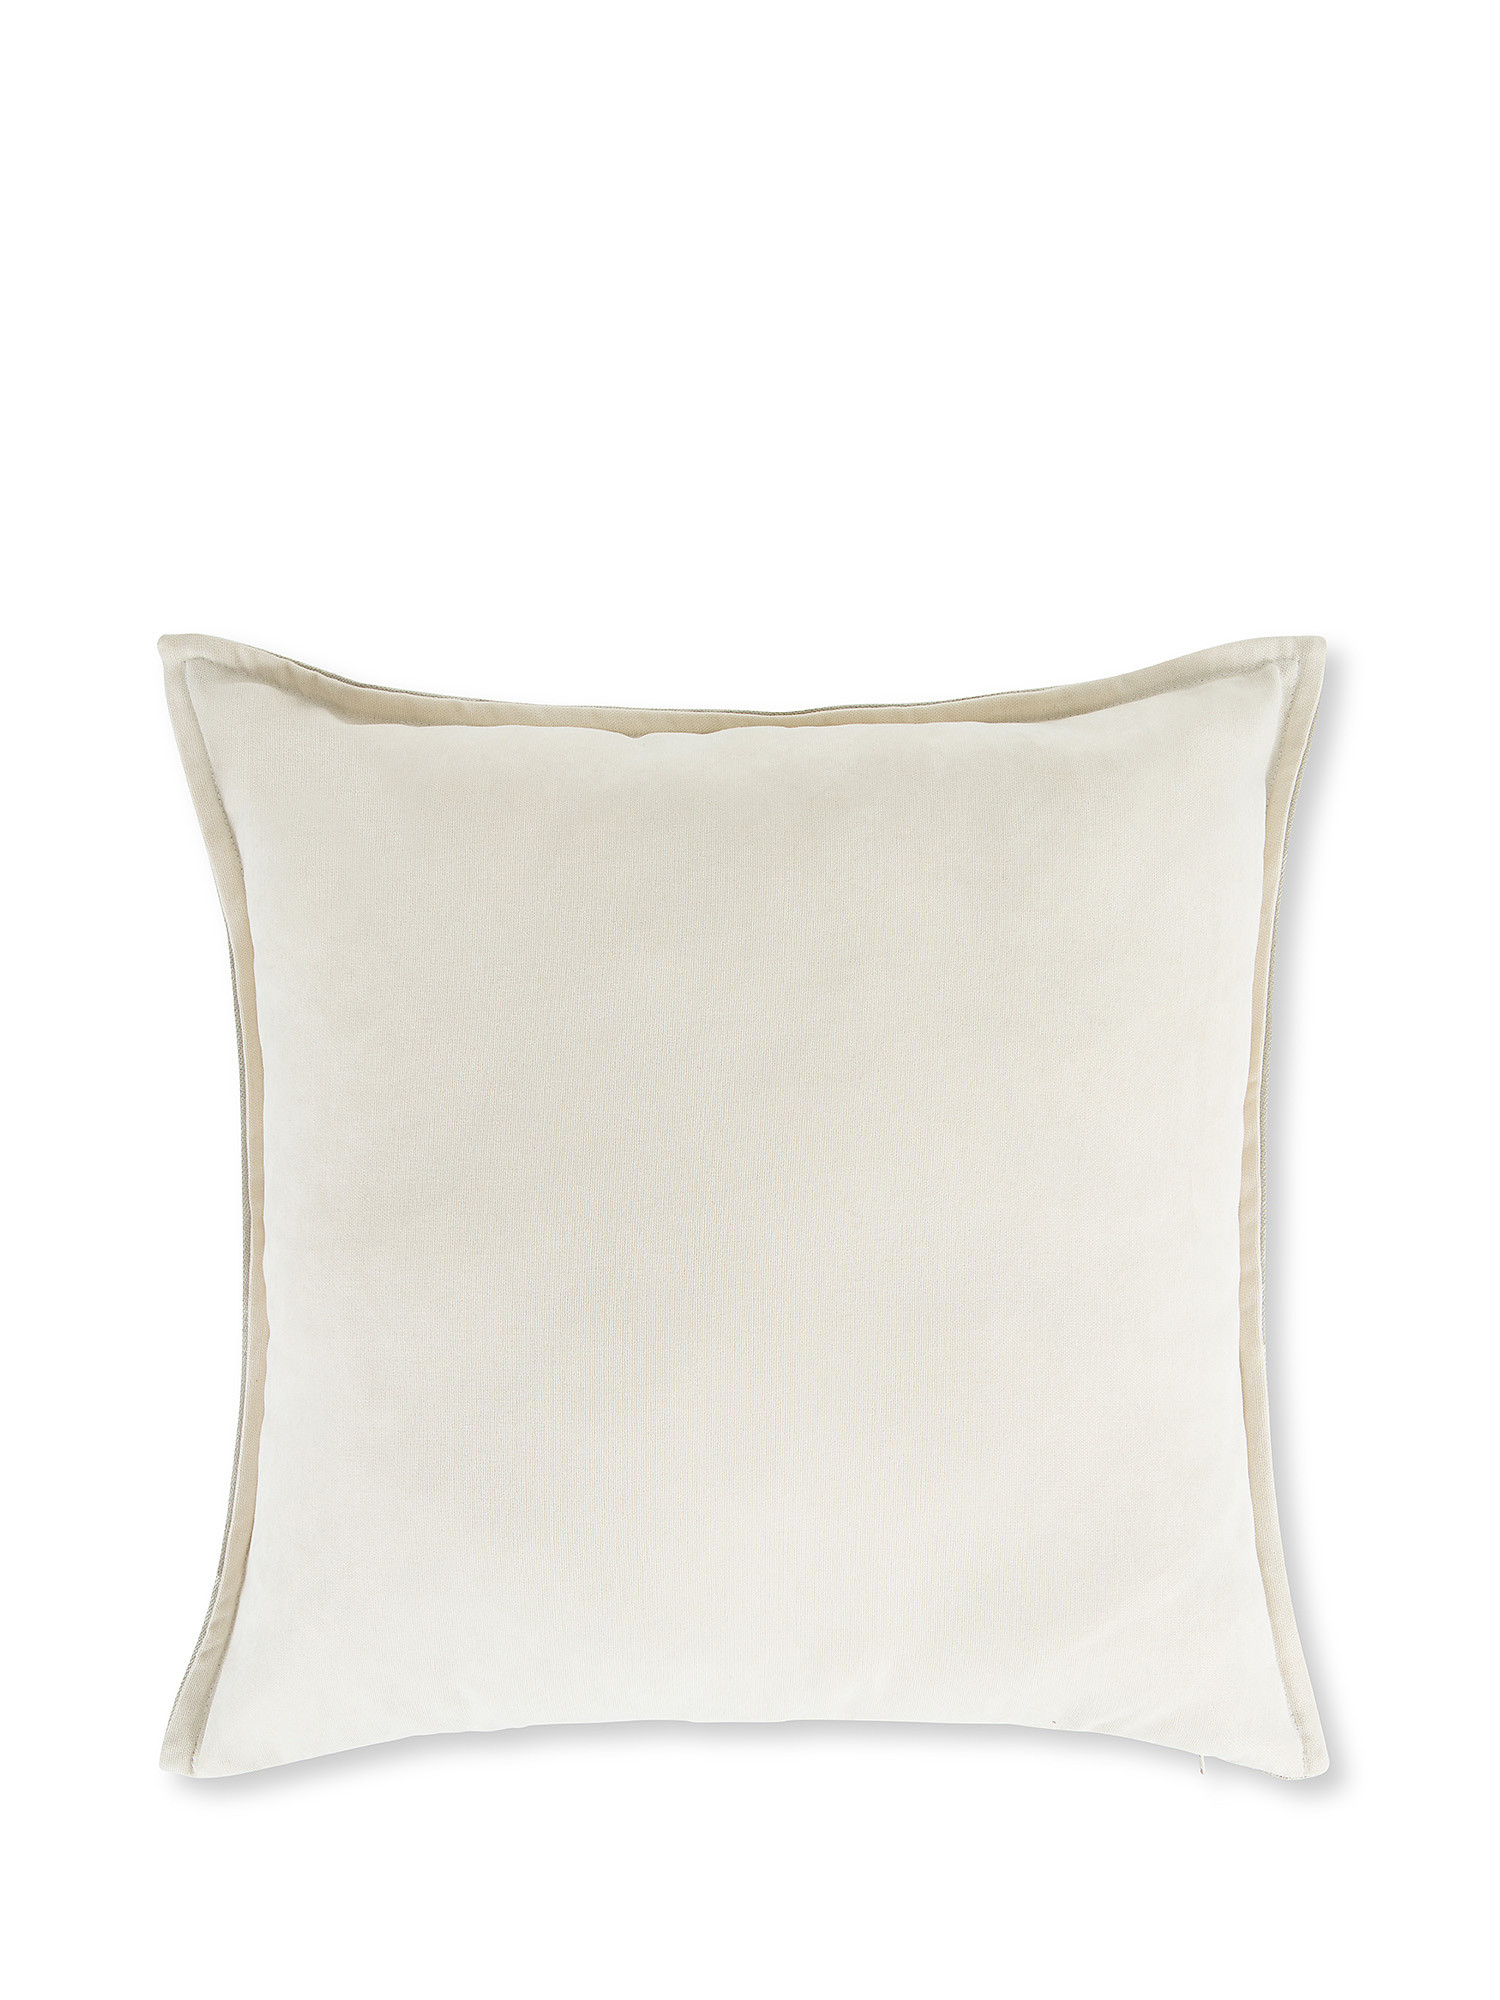 Geometric motif fabric cushion 50x50cm, White, large image number 1